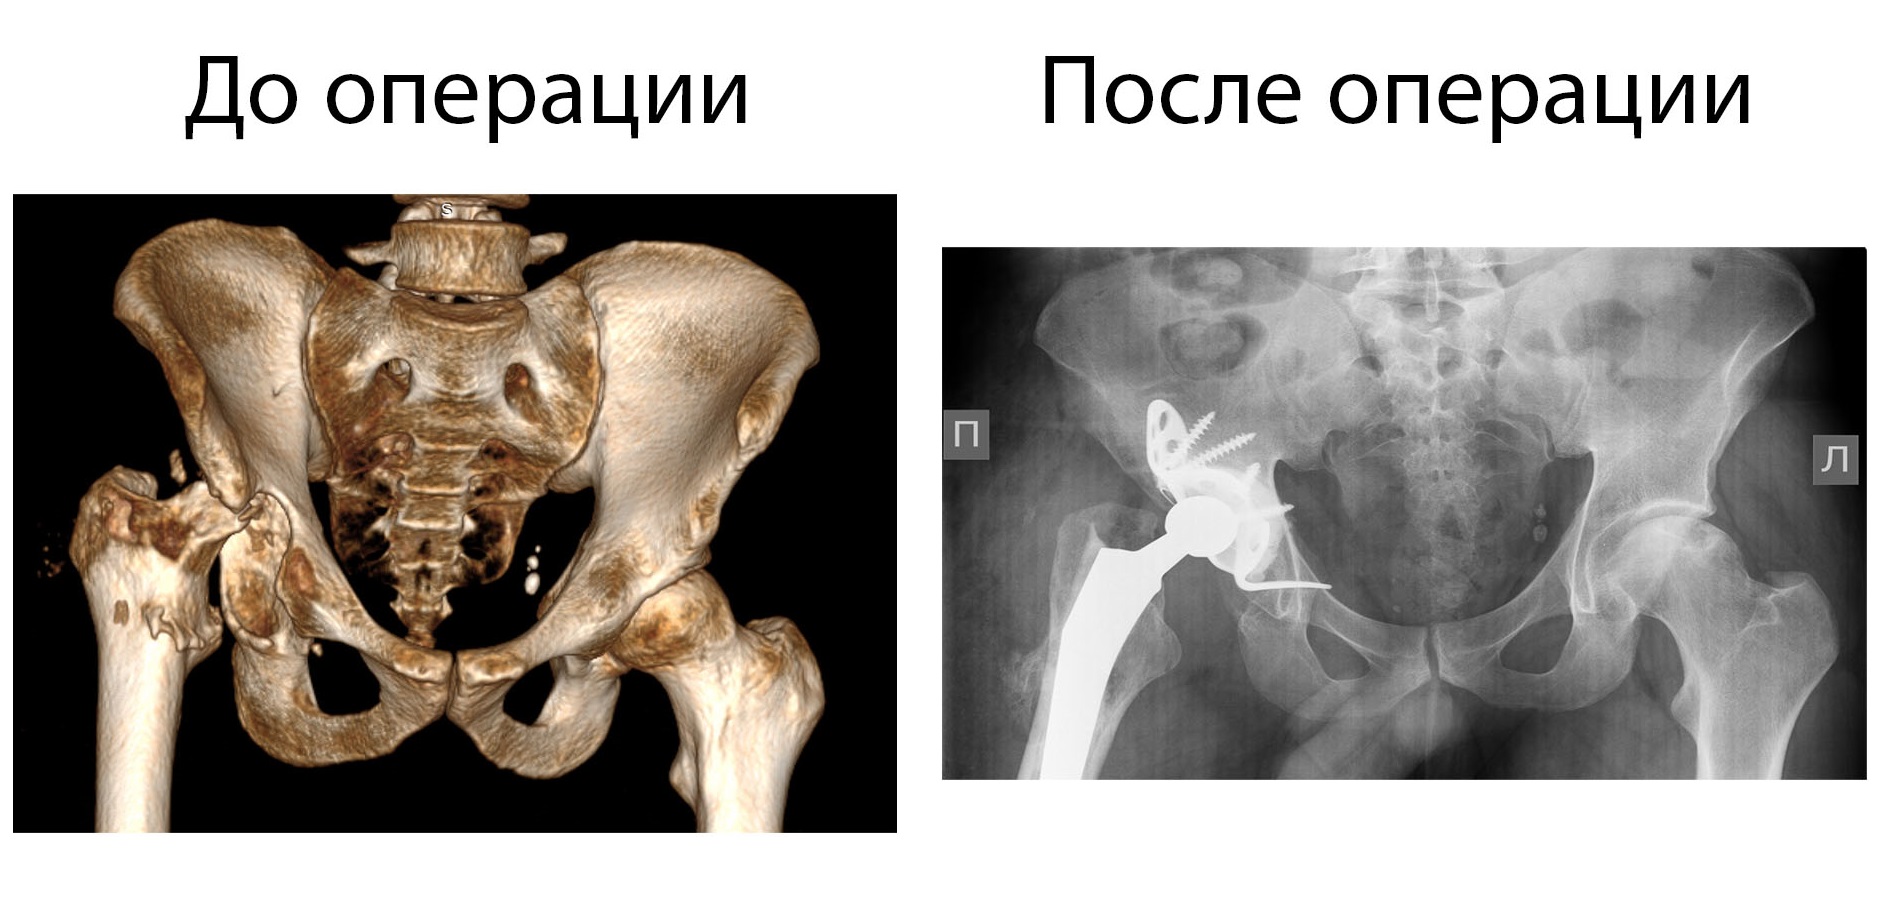 Врачи СПб НИИФ провели имплантацию эндопротеза тазобедренного сустава